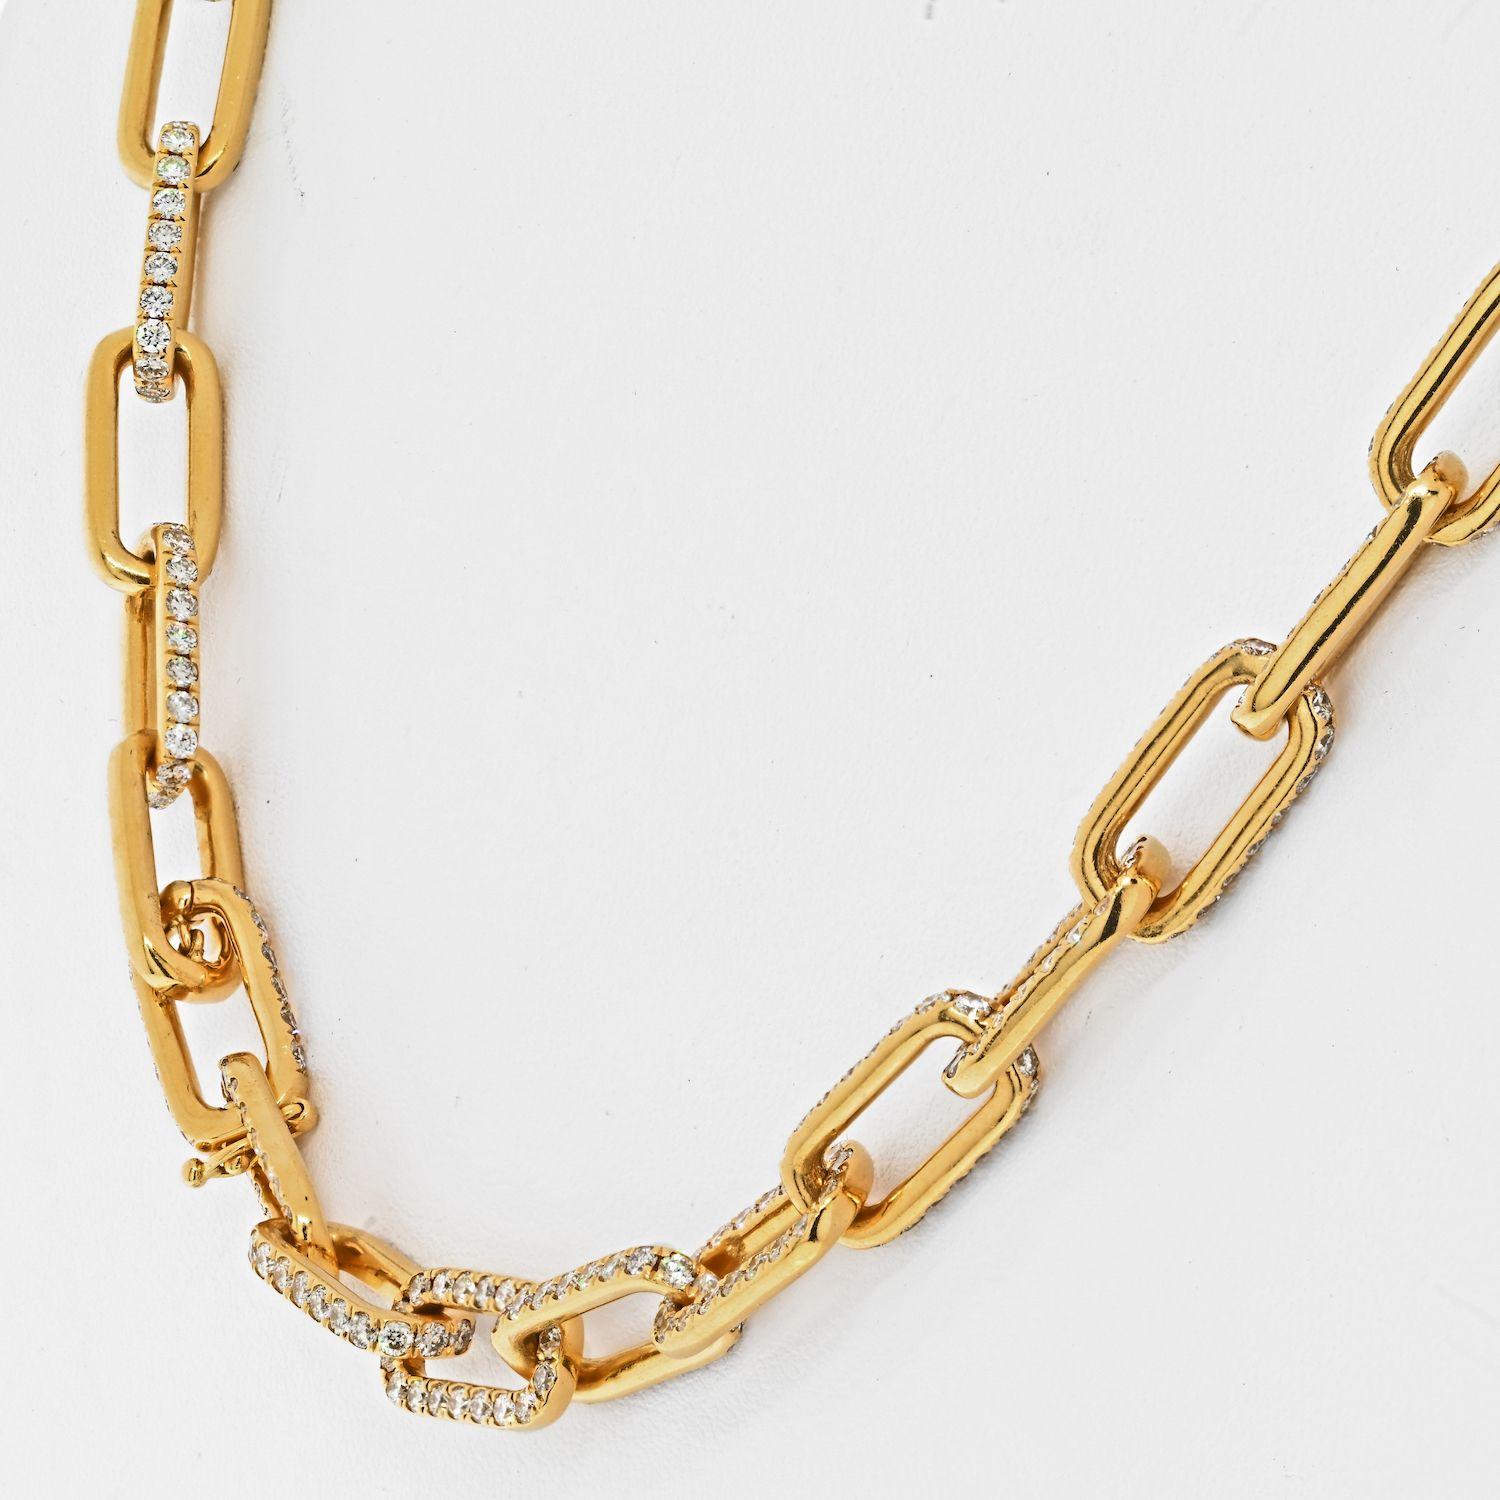 21 carat gold chain